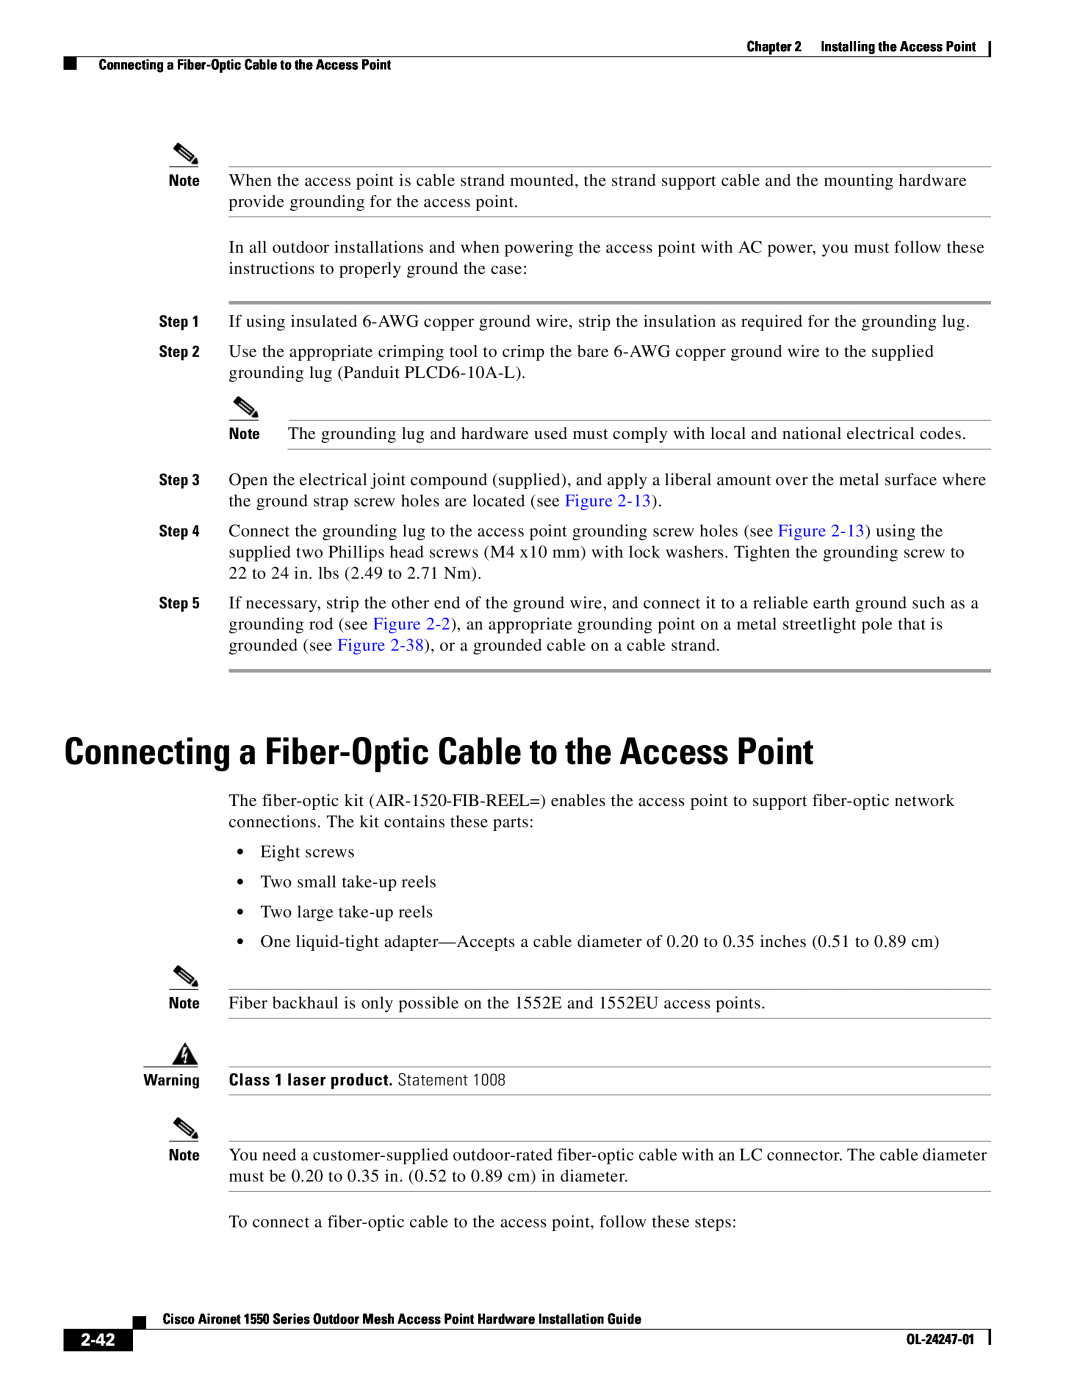 Cisco Systems AIRCAP1552EUAK9, AIRCAP1552EAK9RF, AIRPWRINJ15002 Connecting a Fiber-Optic Cable to the Access Point, 2-42 